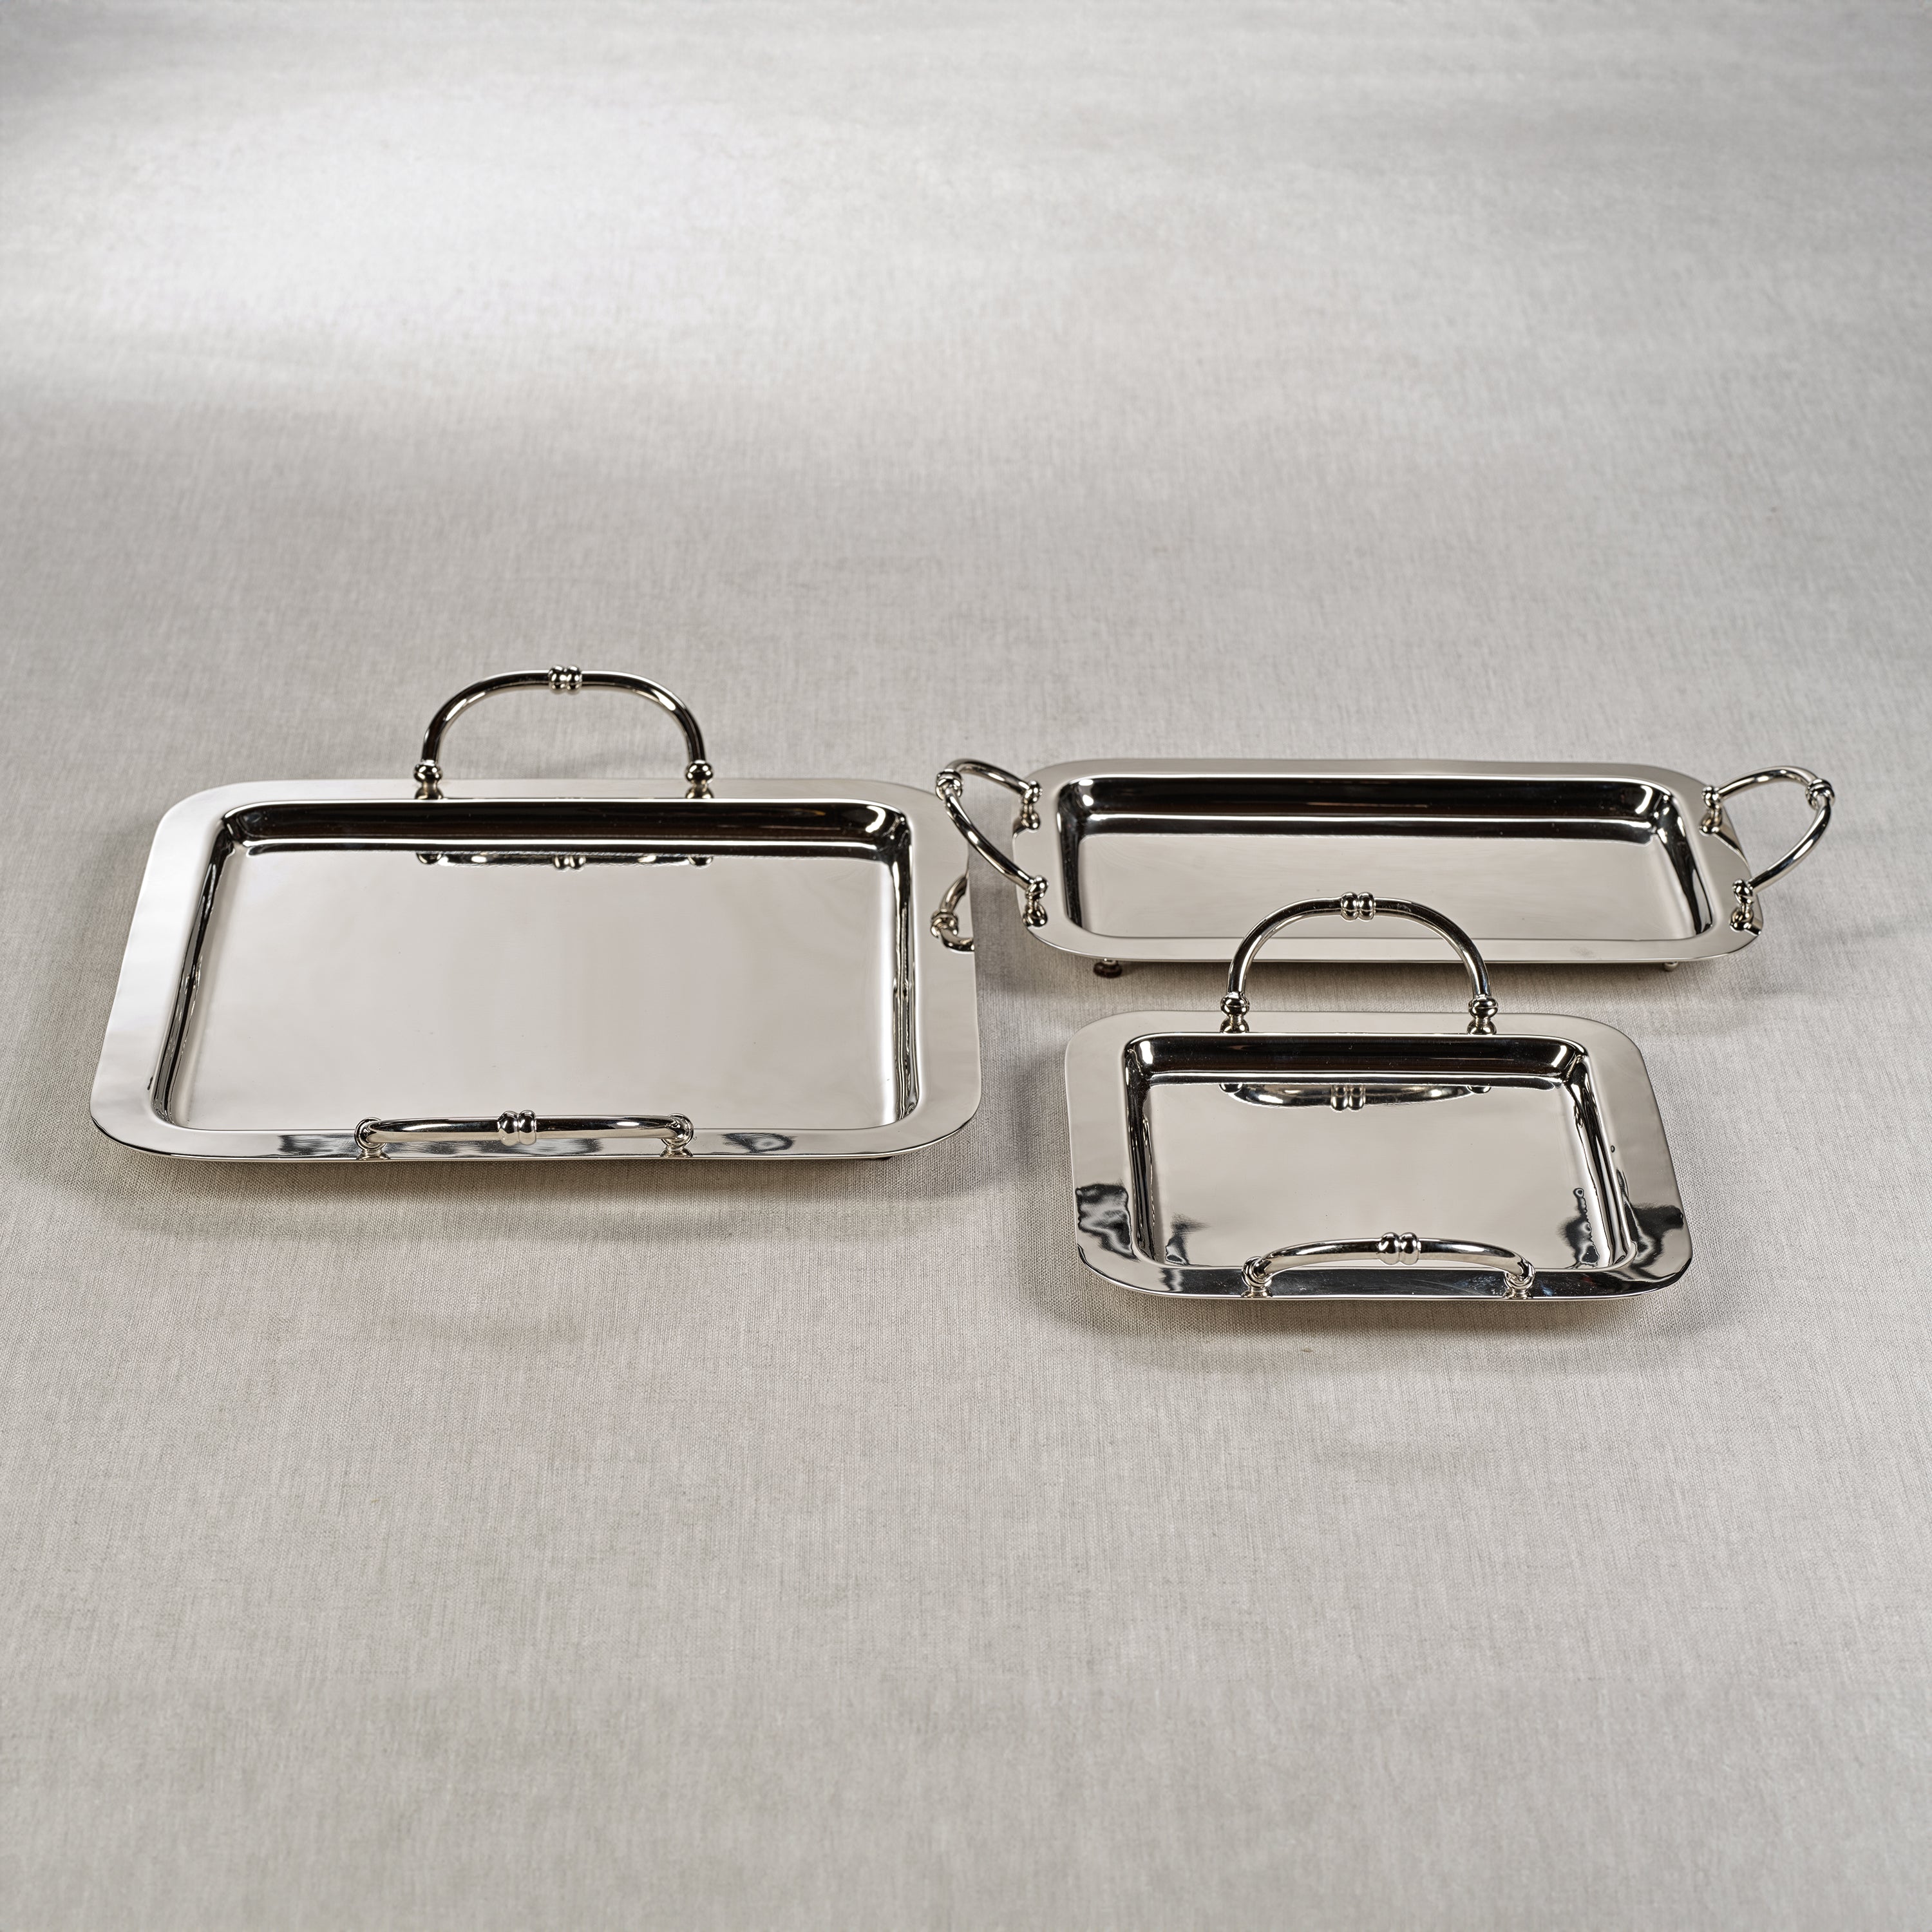 Manetta Steel & Brass Tray - Polished Nickel - 5 sizes